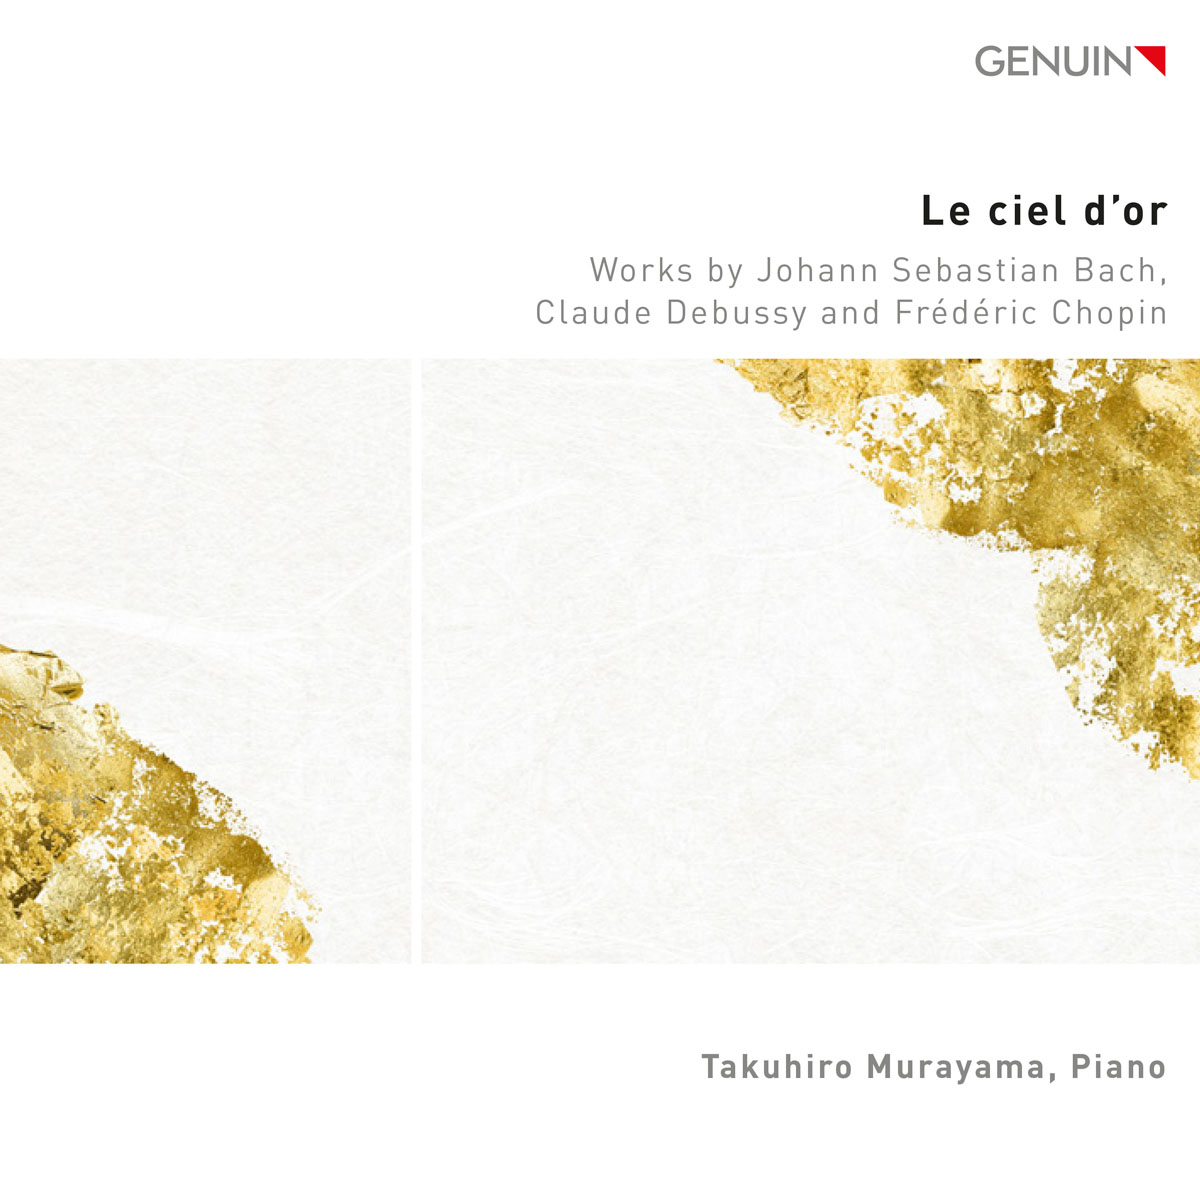 CD album cover 'Le ciel d'or' (GEN 24865d) with Takuhiro Murayama